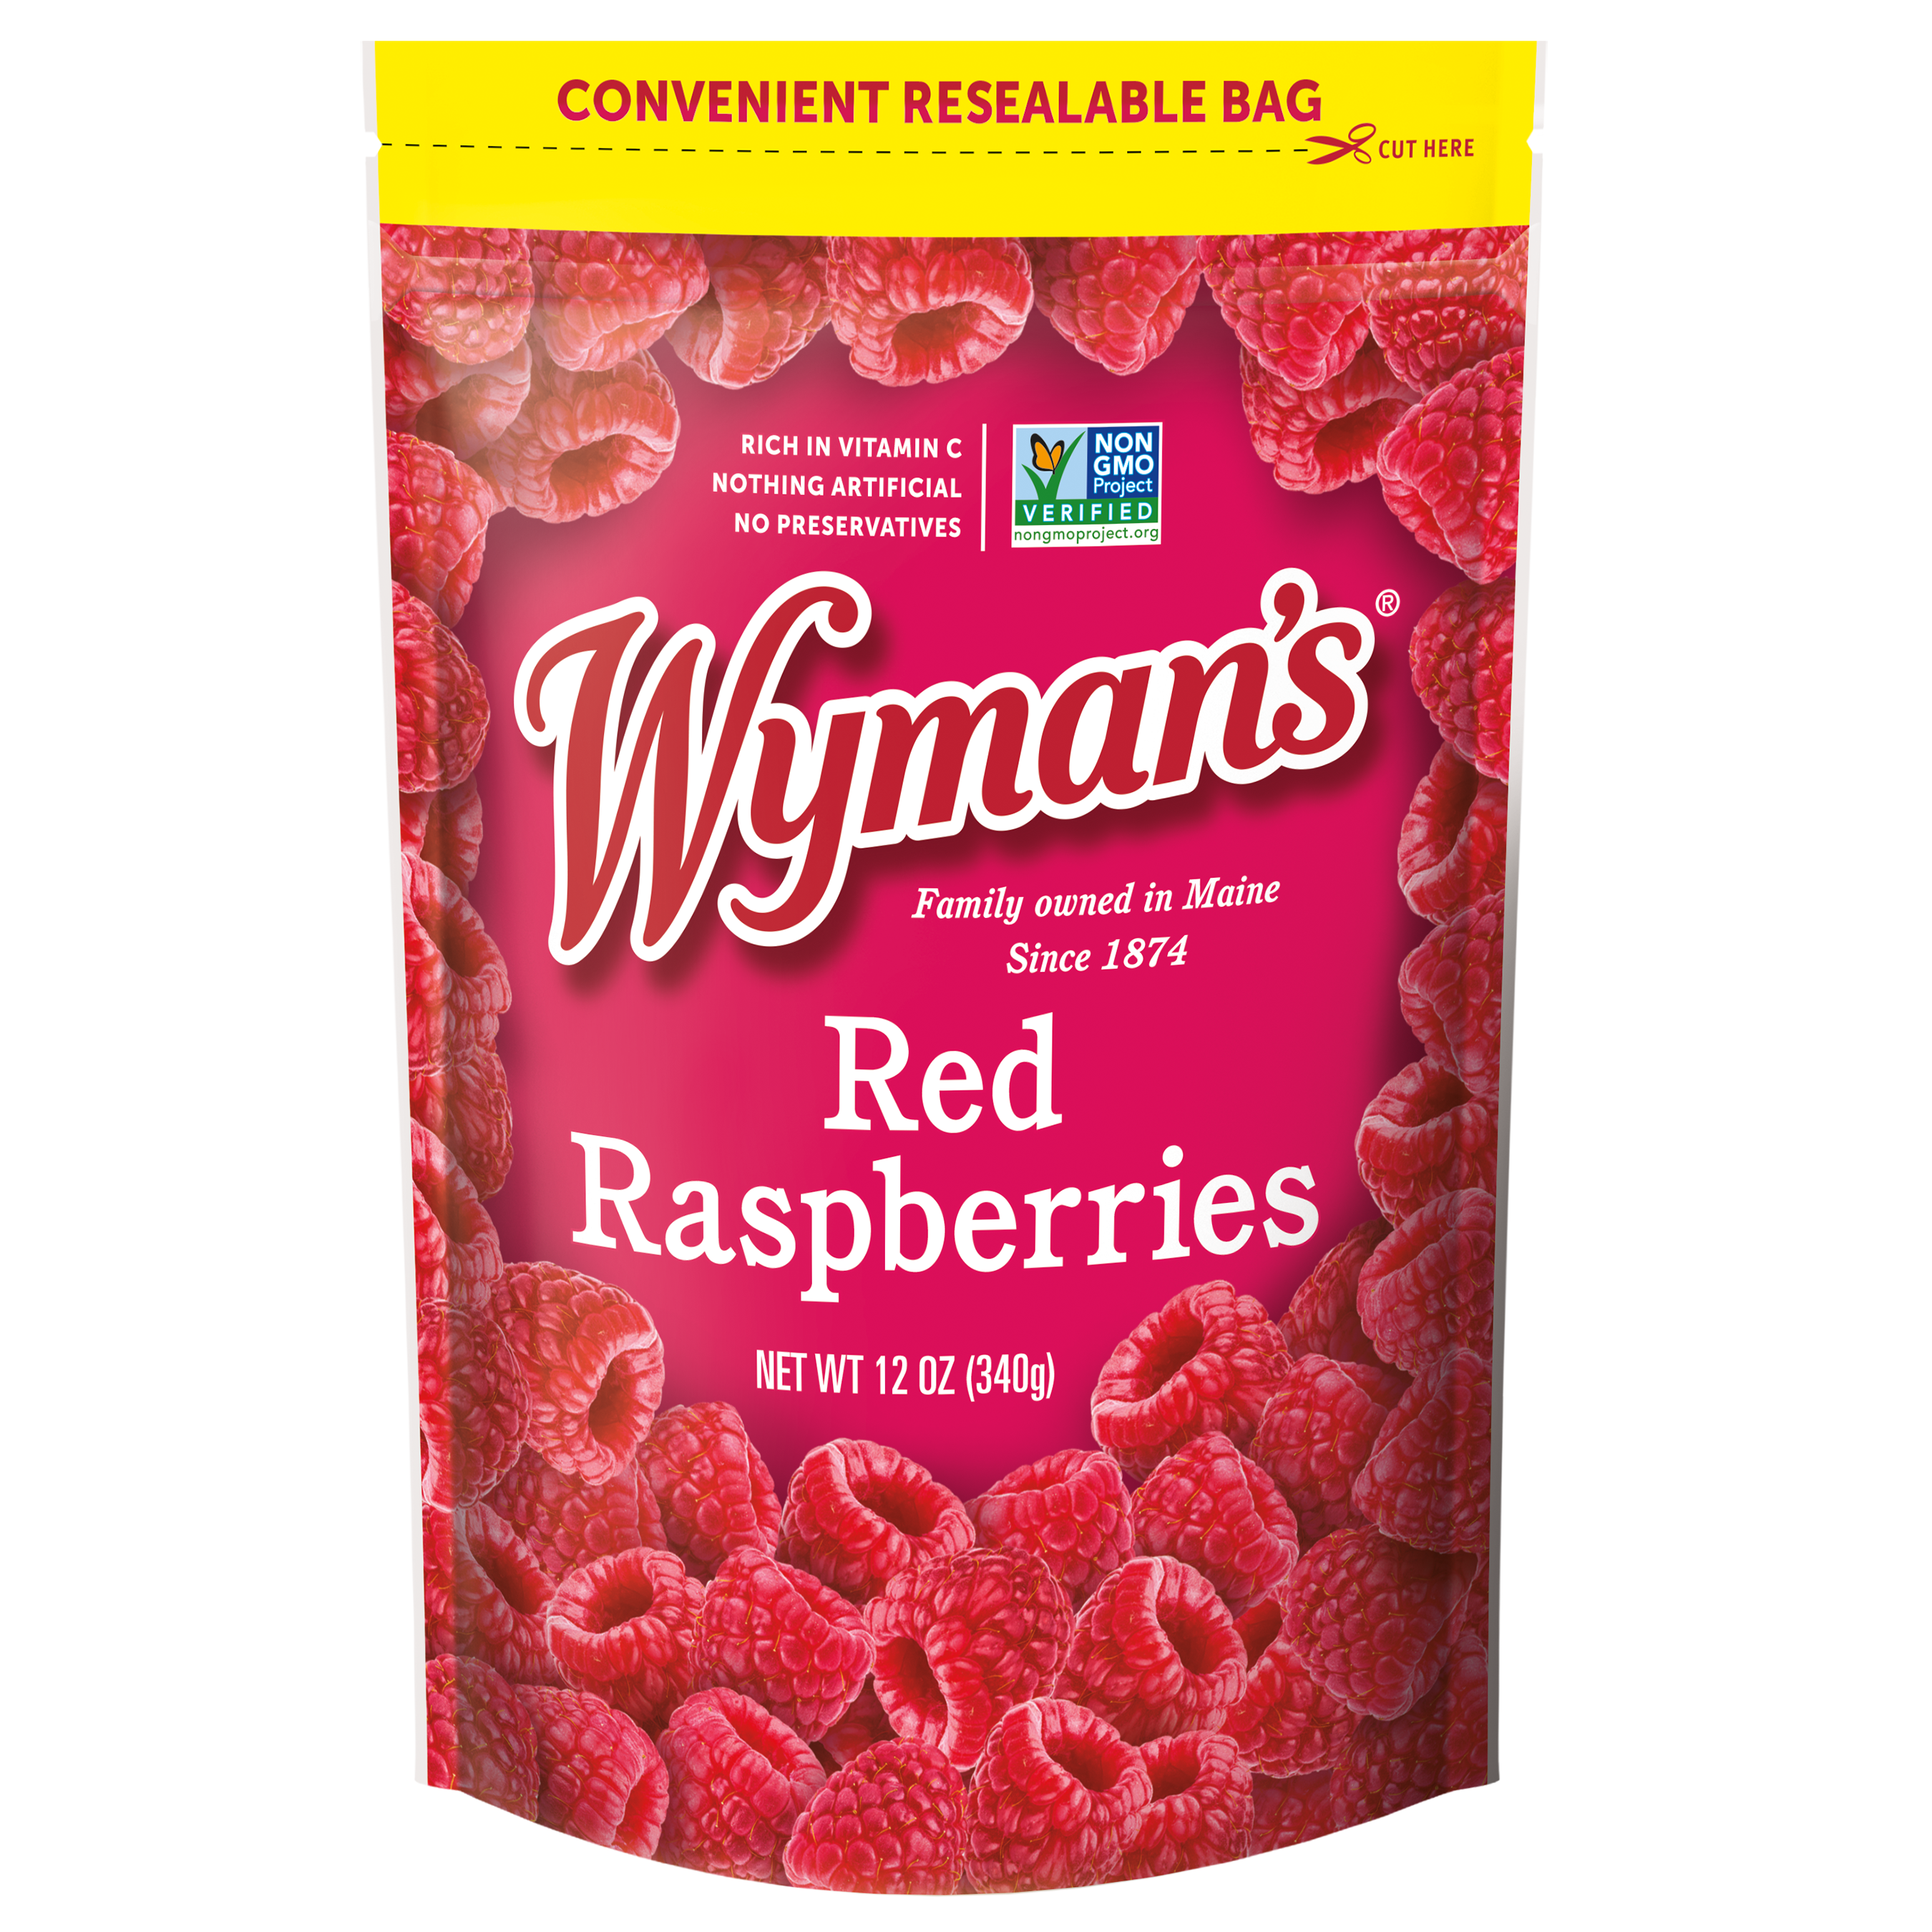 A bag of fresh-frozen Shop Wyman's red raspberries.